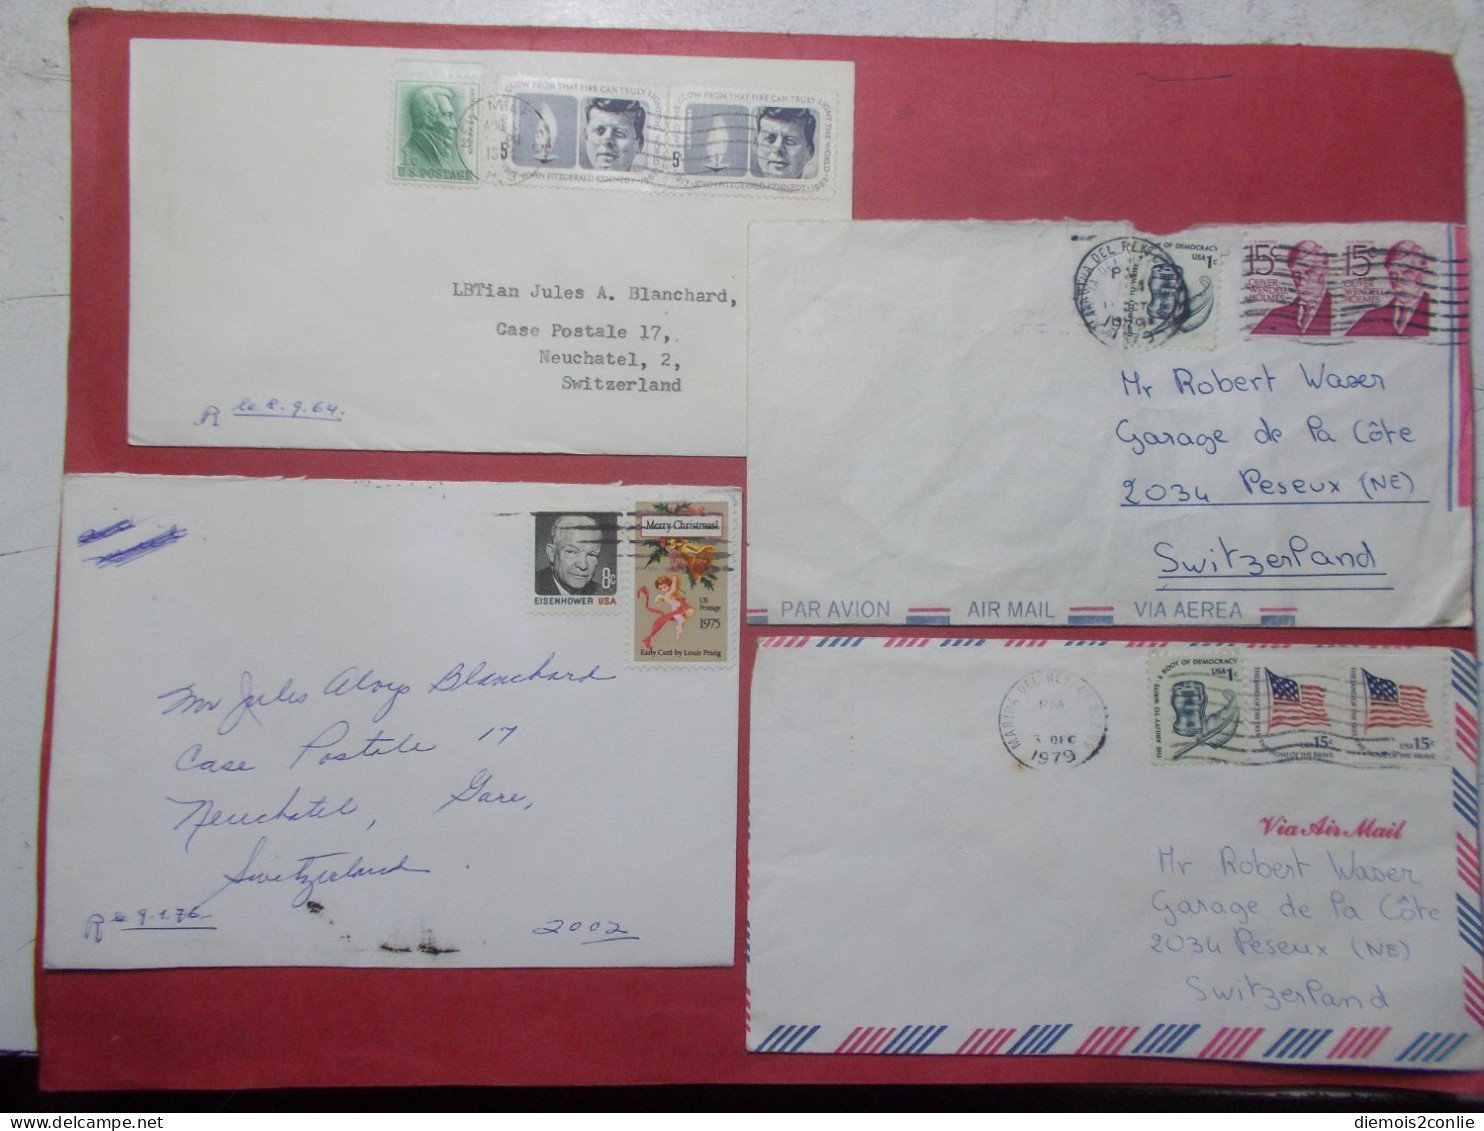 Marcophilie - Lot 4 Lettres Enveloppes Oblitérations Timbres USA Destination SUISSE (B332) - Poststempel